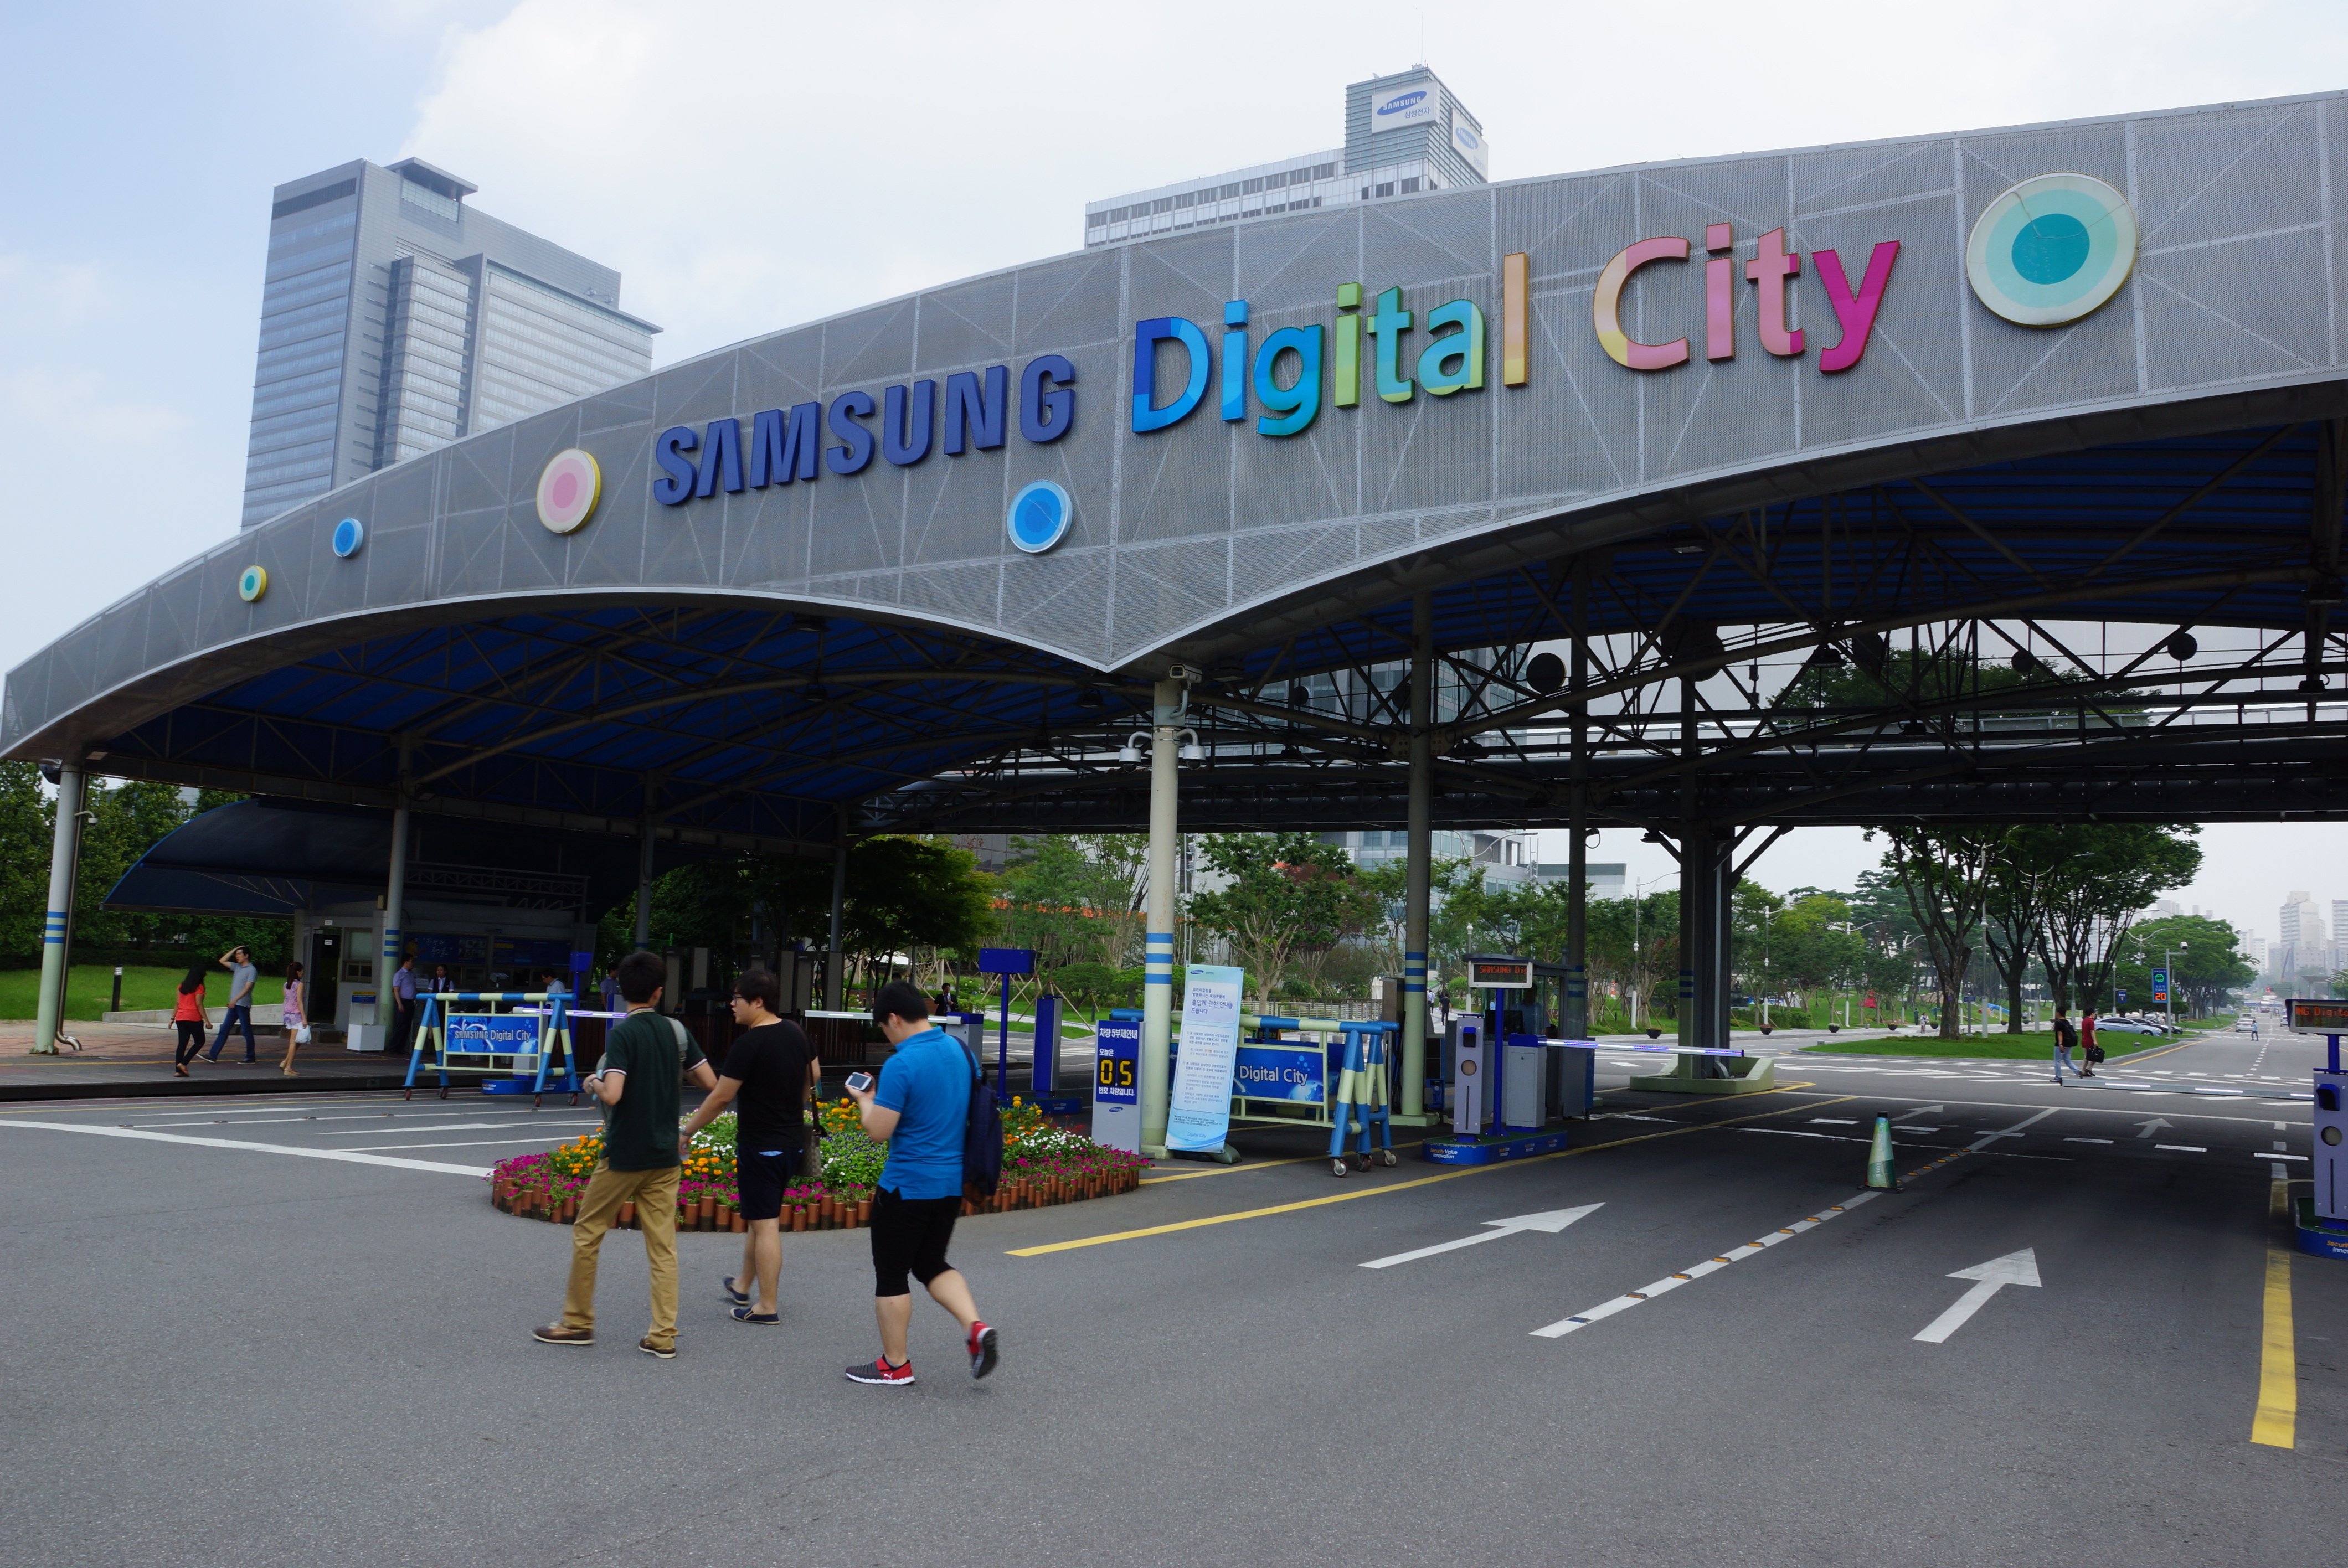 Samsung_Digital_City_sign.jpg